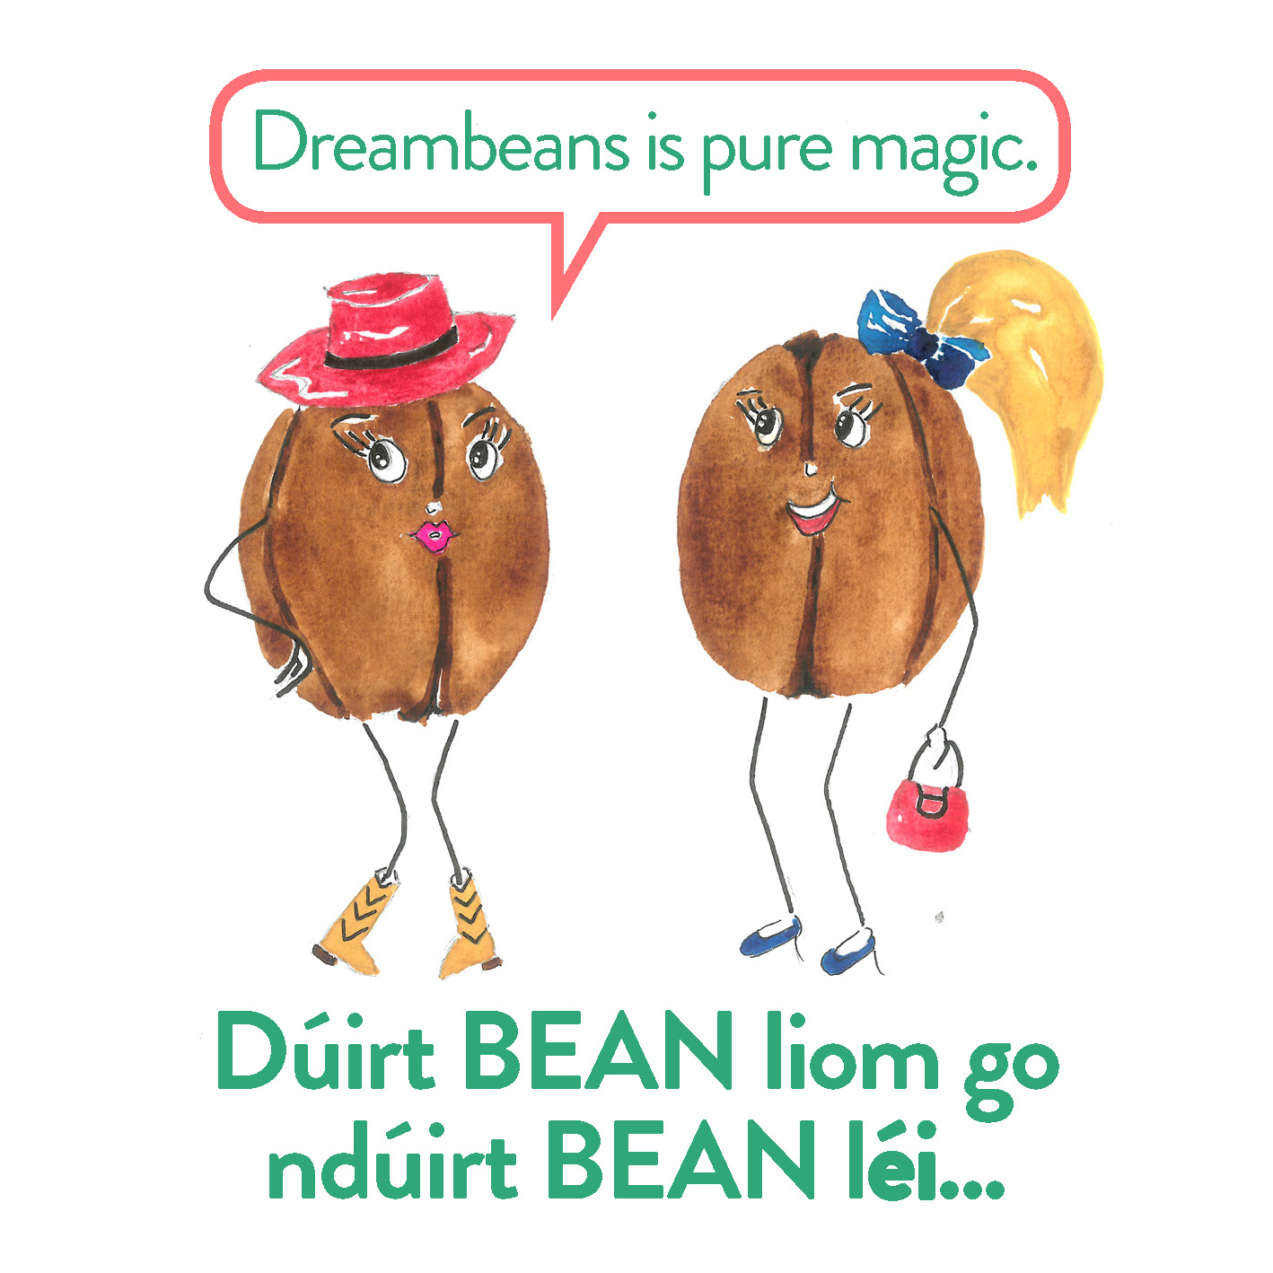 Dreambeans is pure magic